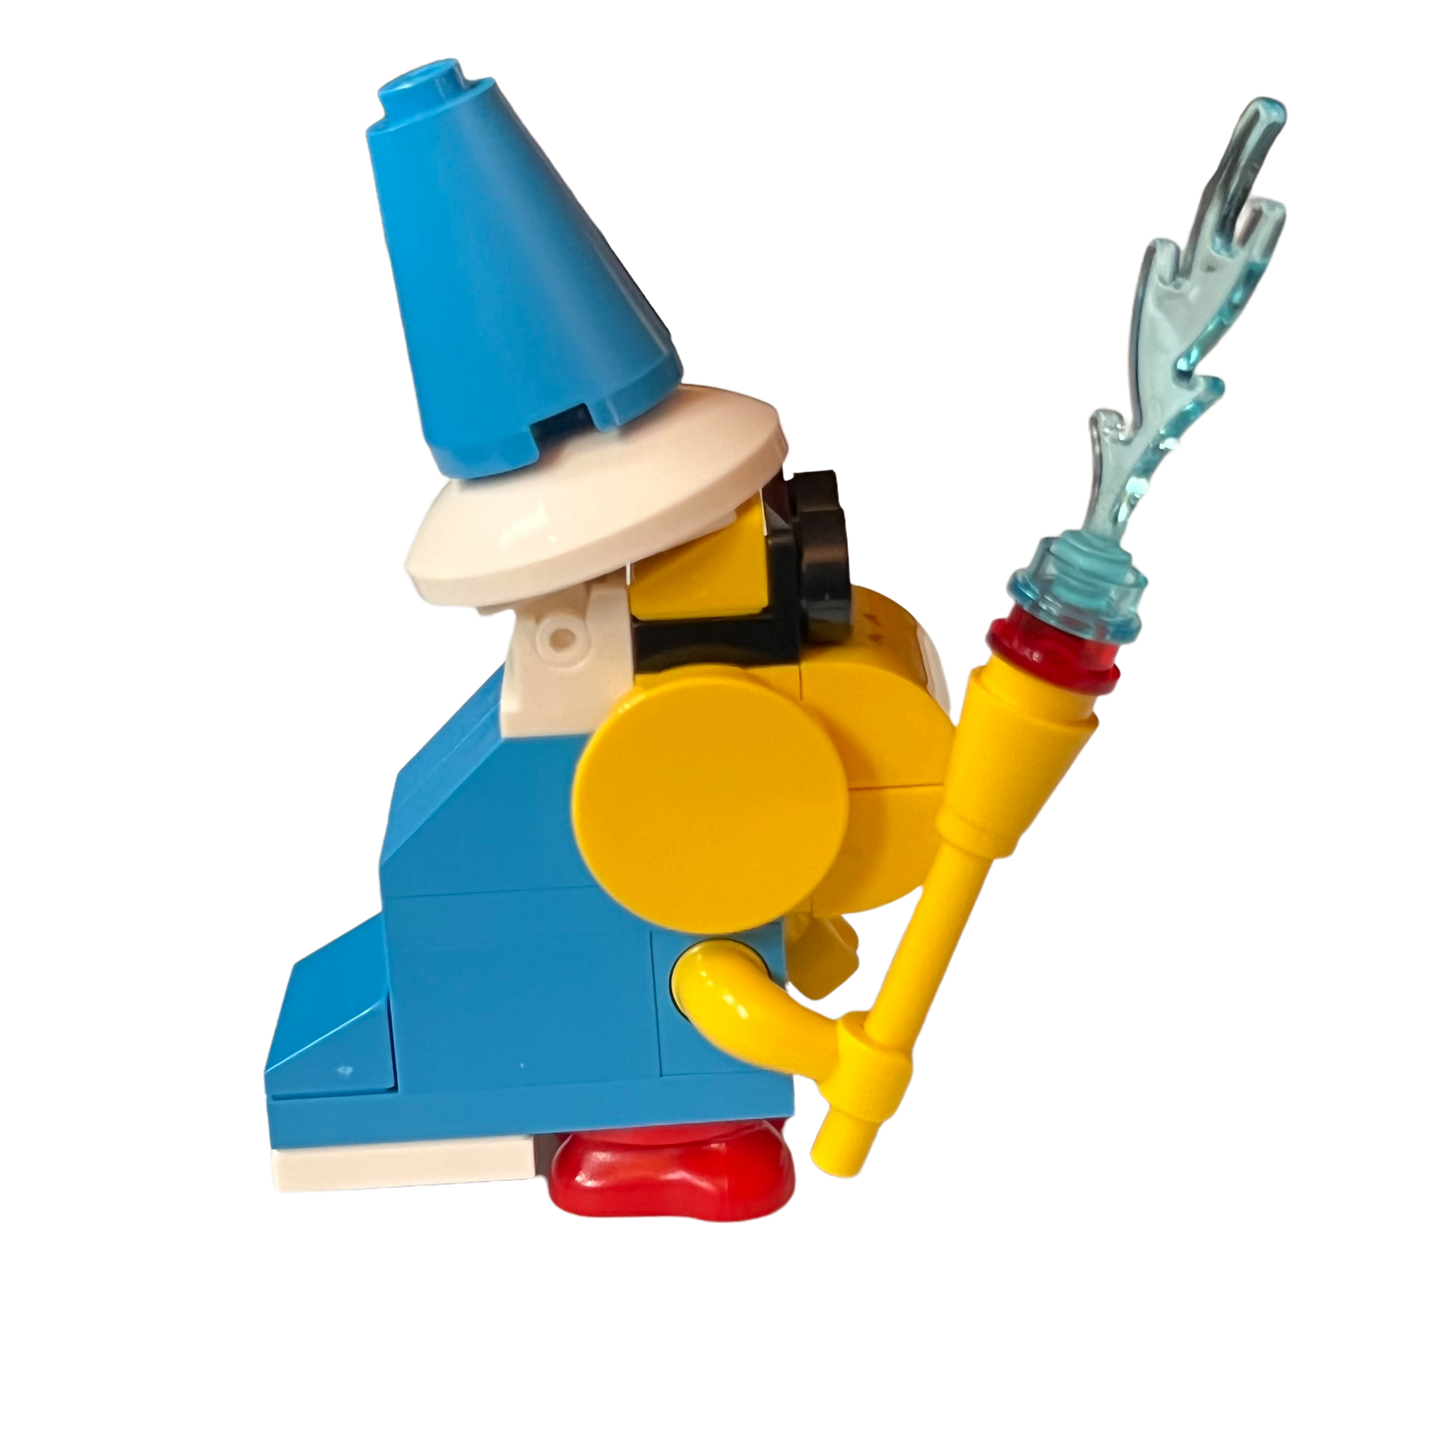 KAMEK Minifigure (LEGO Super Mario) BRAND NEW & Unsealed - RARE (From #71407)